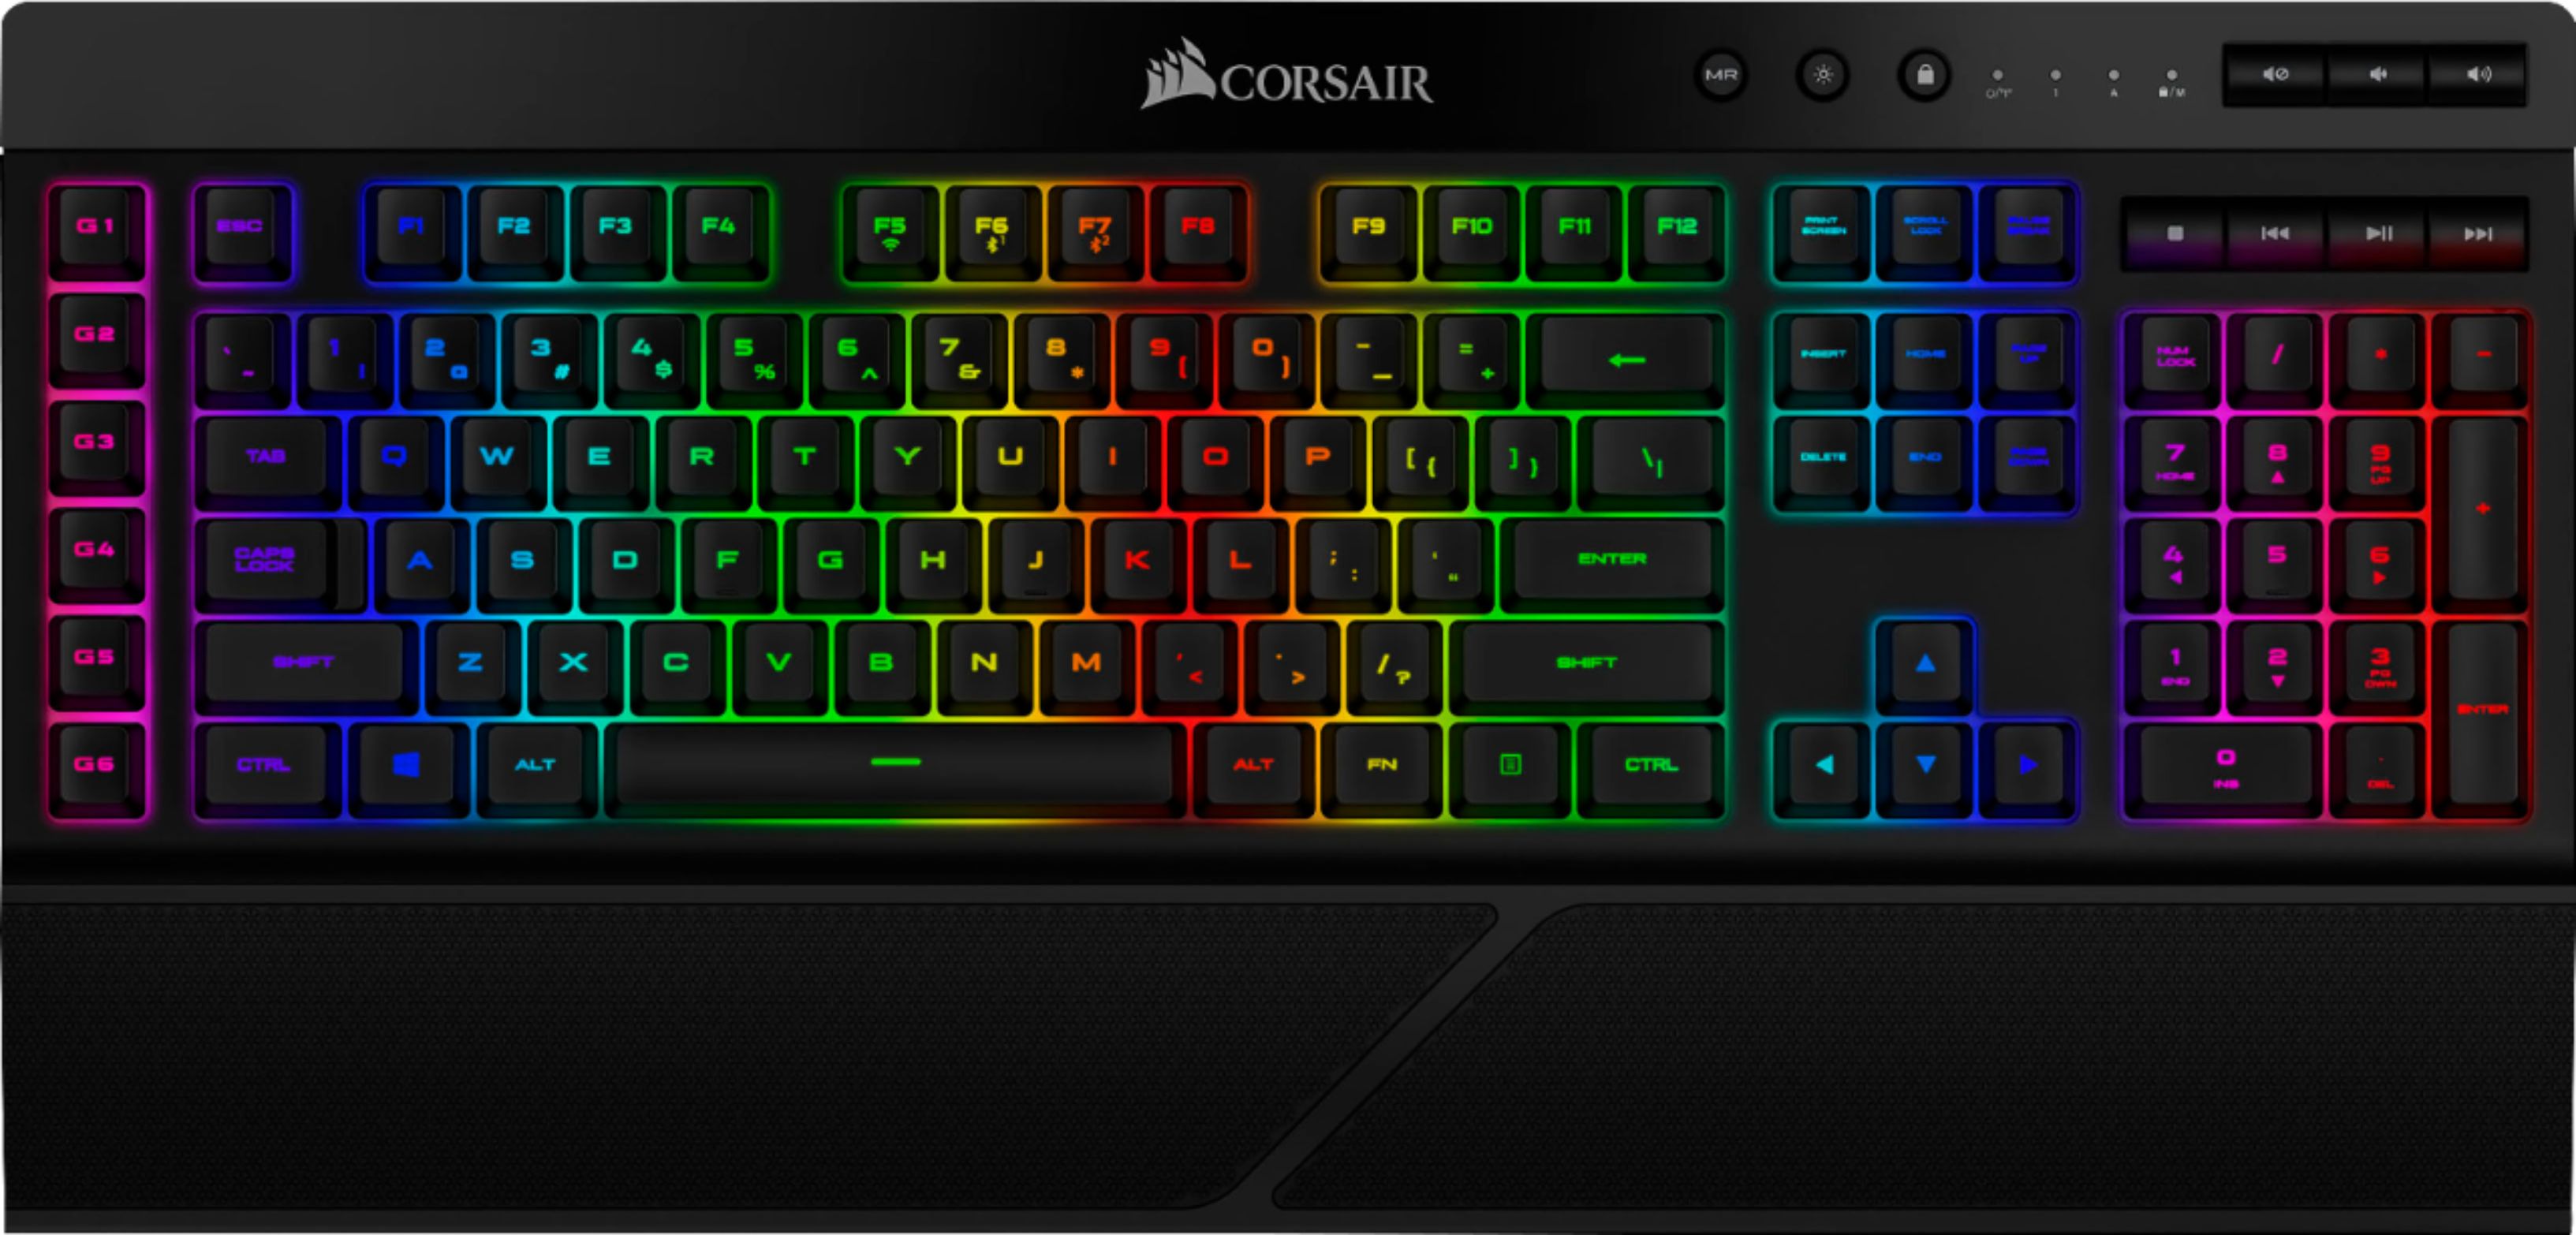 corsair keyboard on ps4